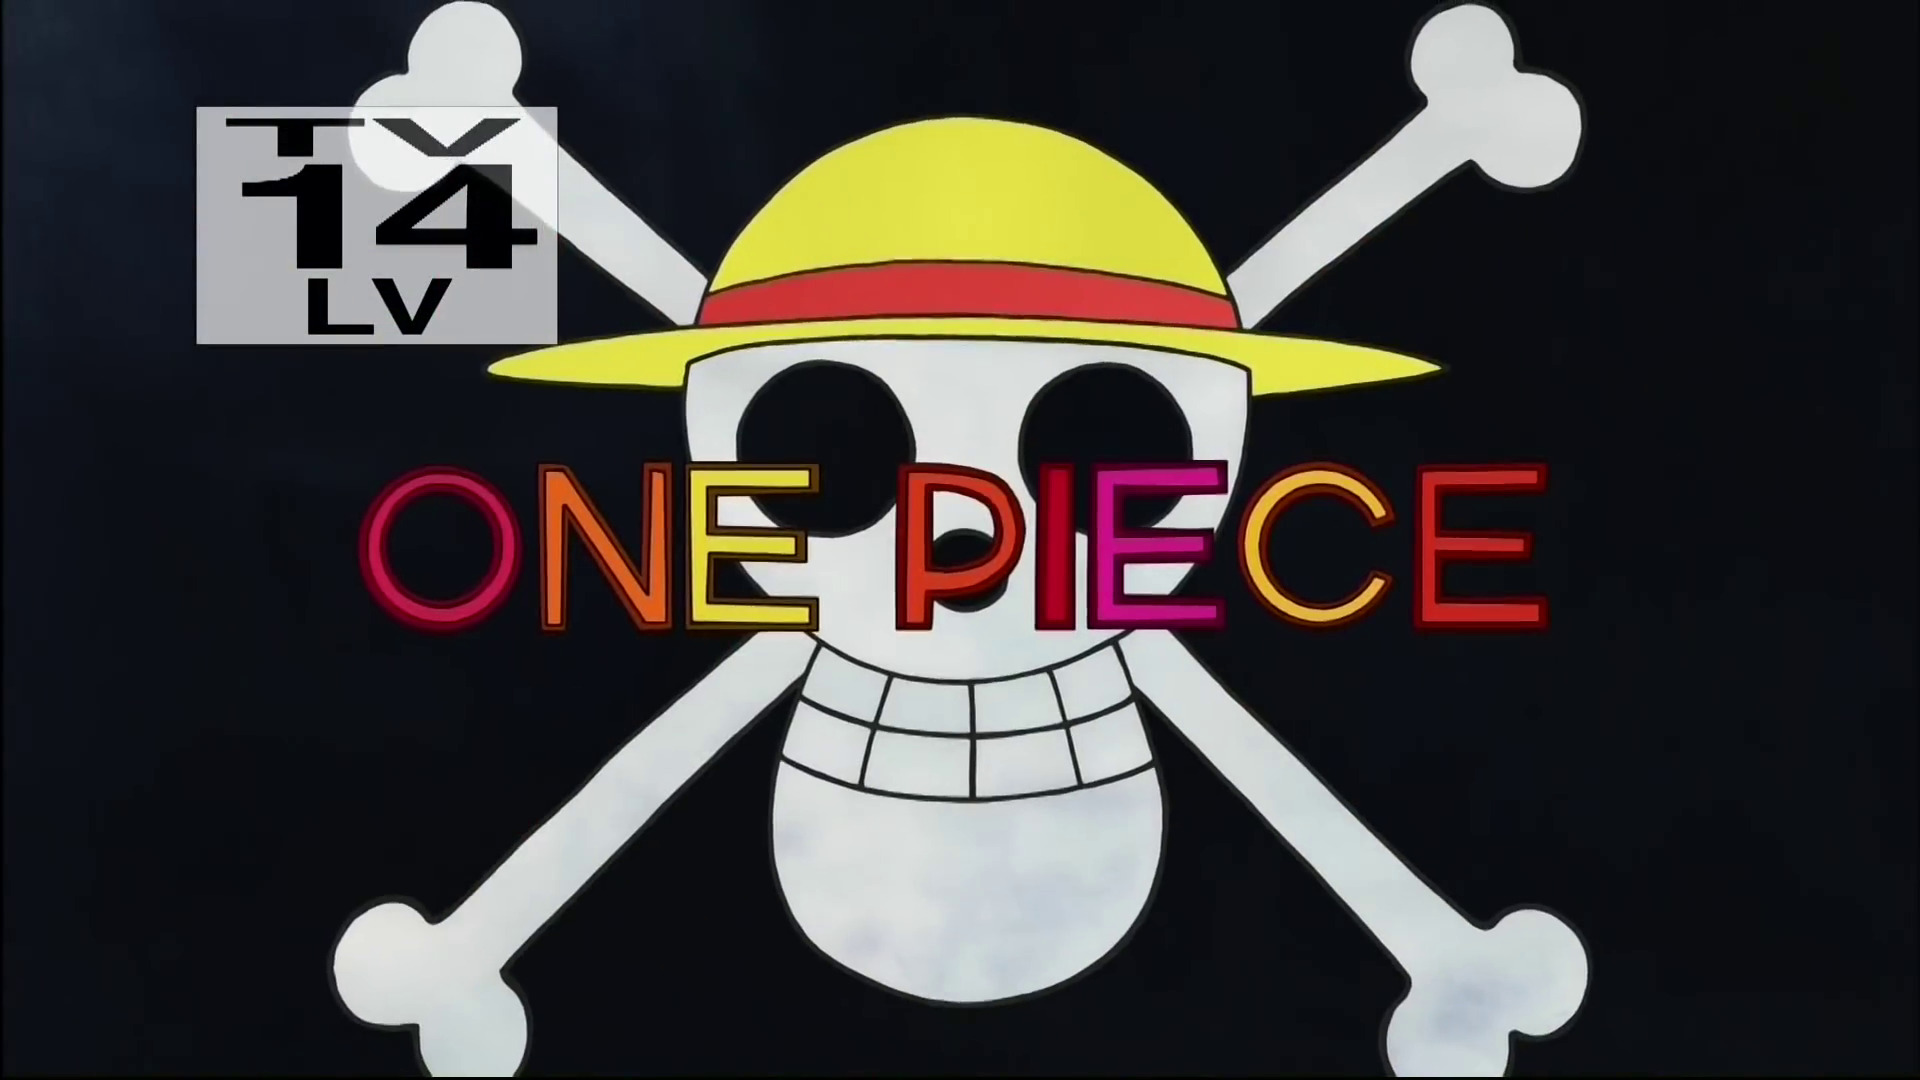 One Piece, Cartoon Network/Adult Swim Archives Wiki